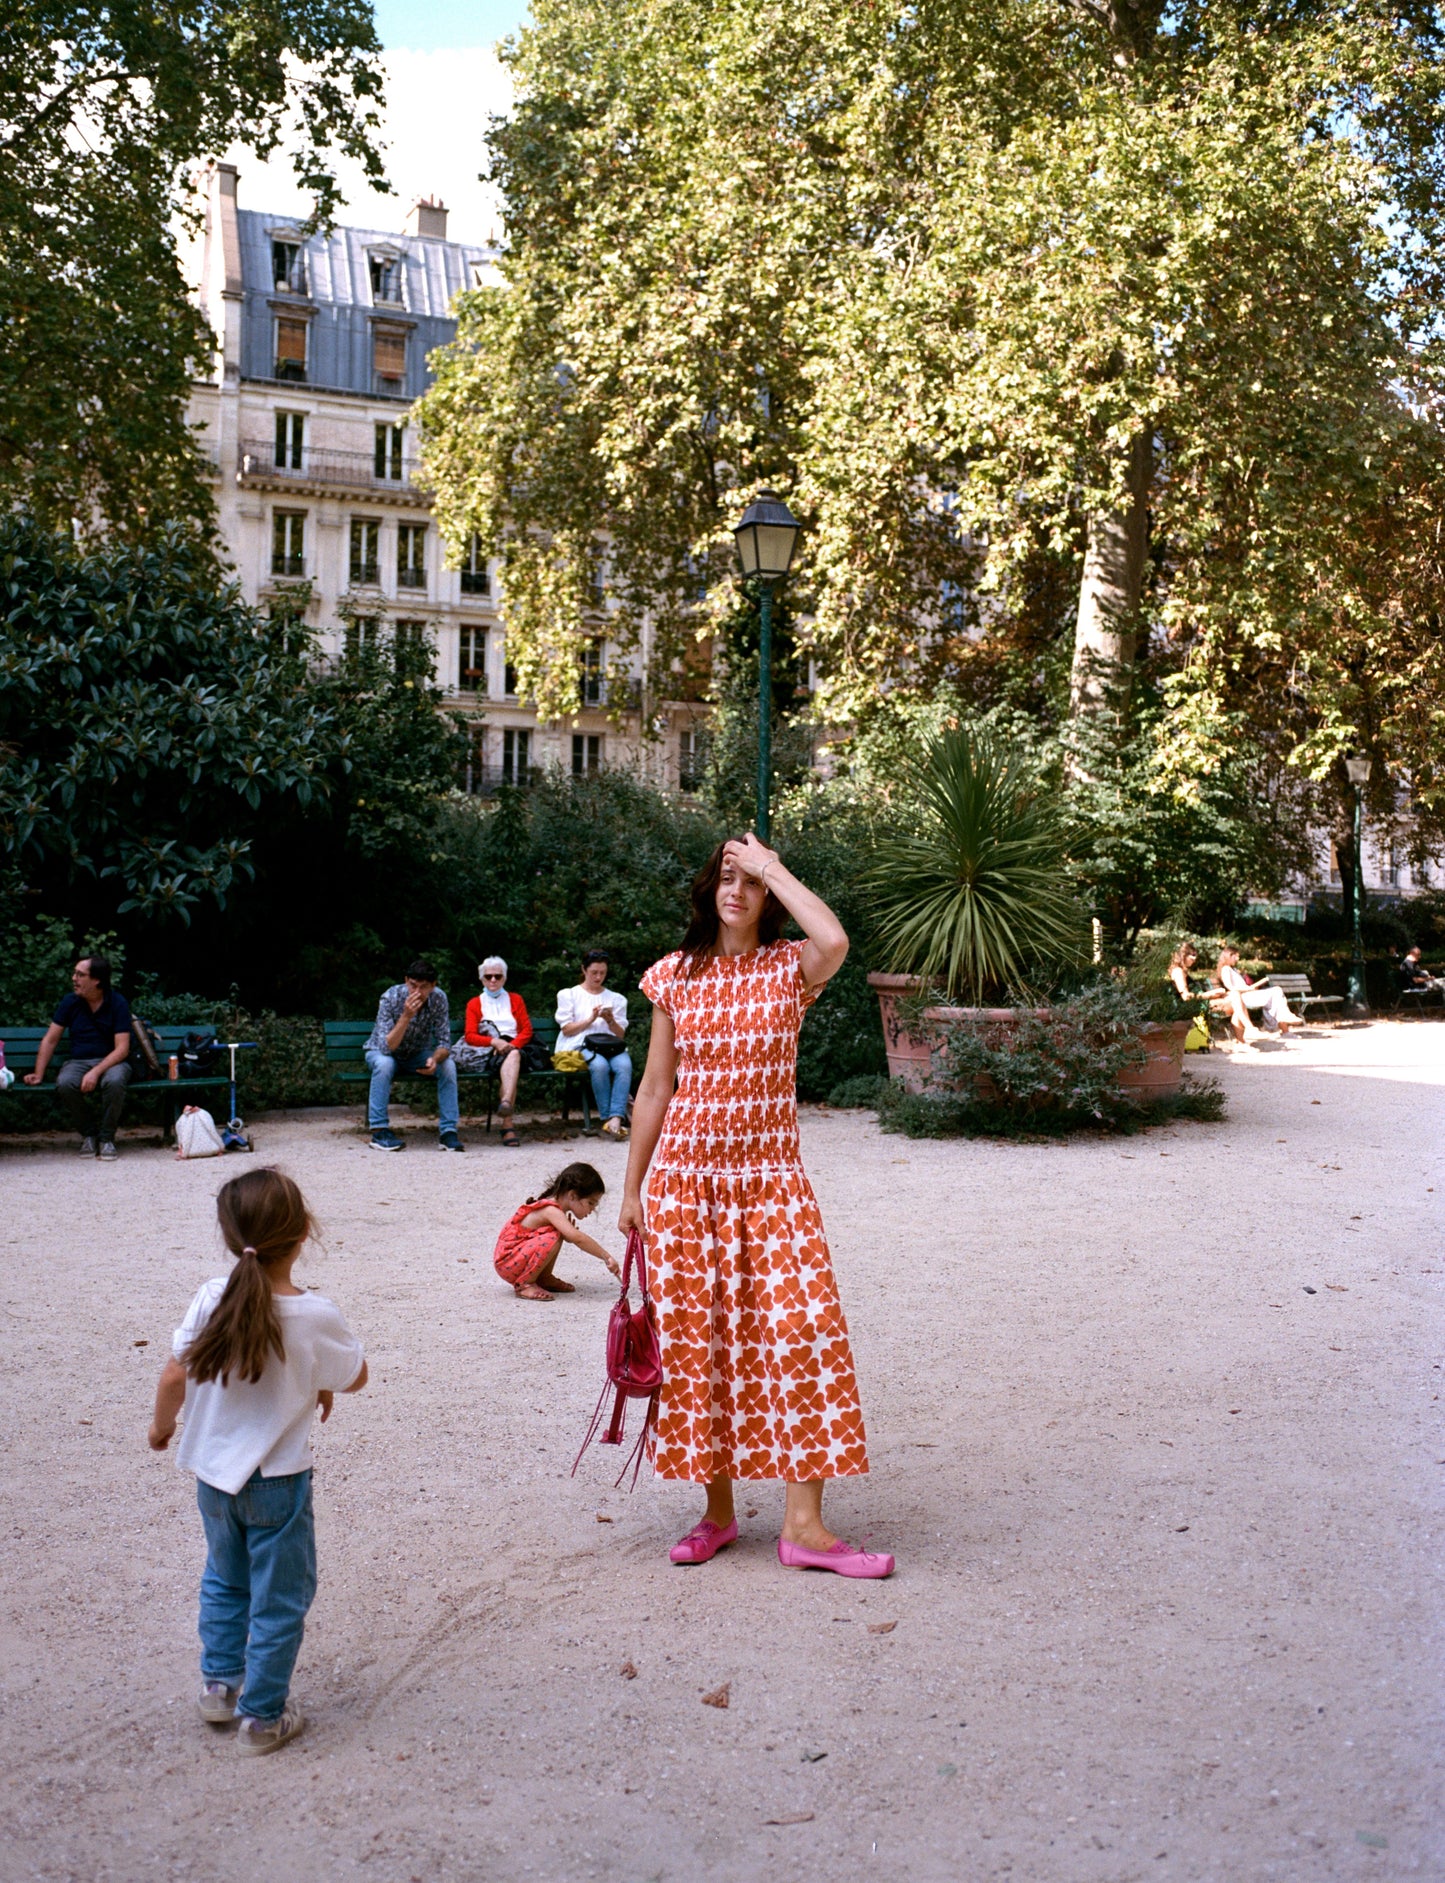 The PARIS dress